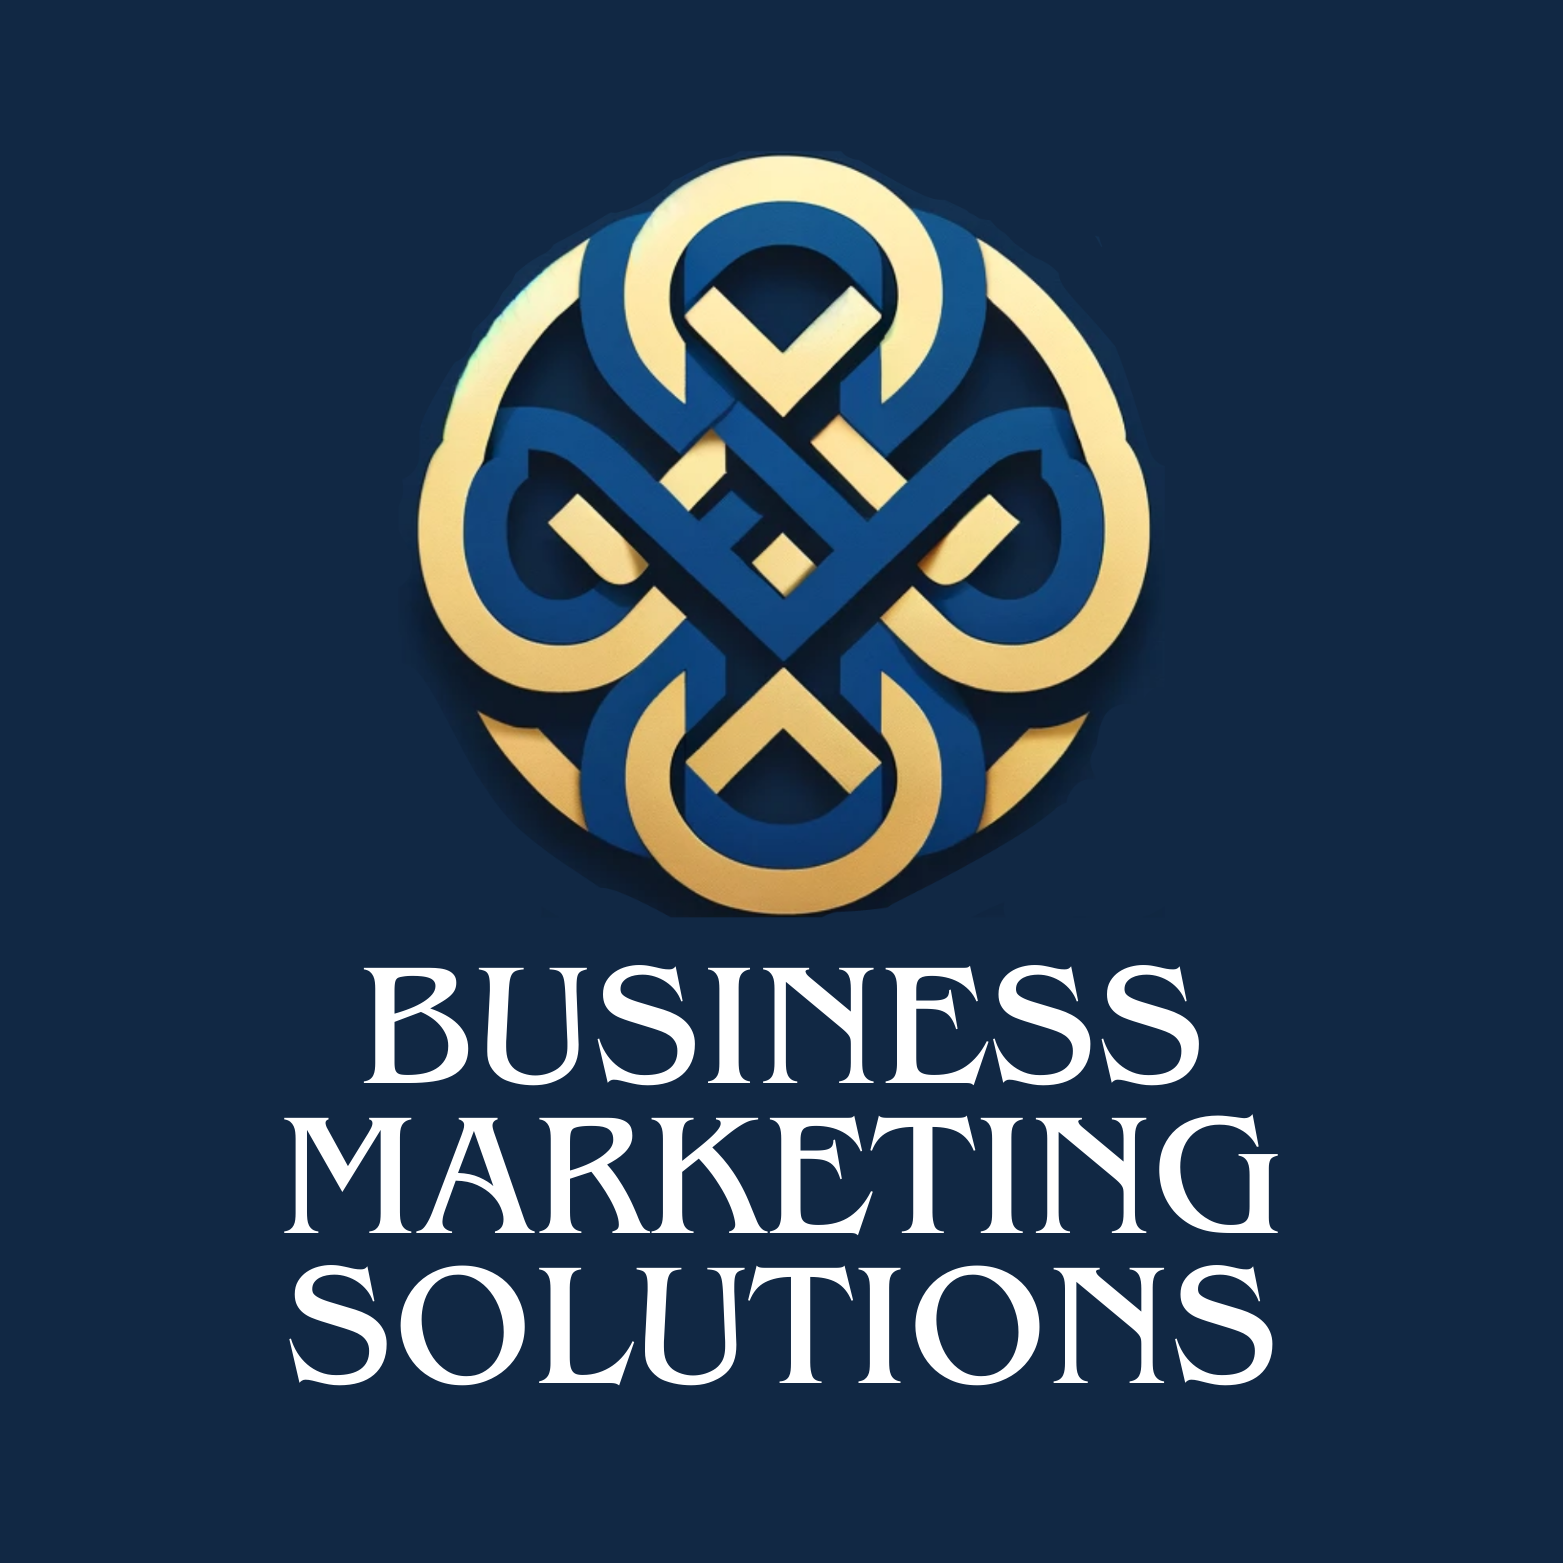 (c) Businessmarketingsolutions.co.uk